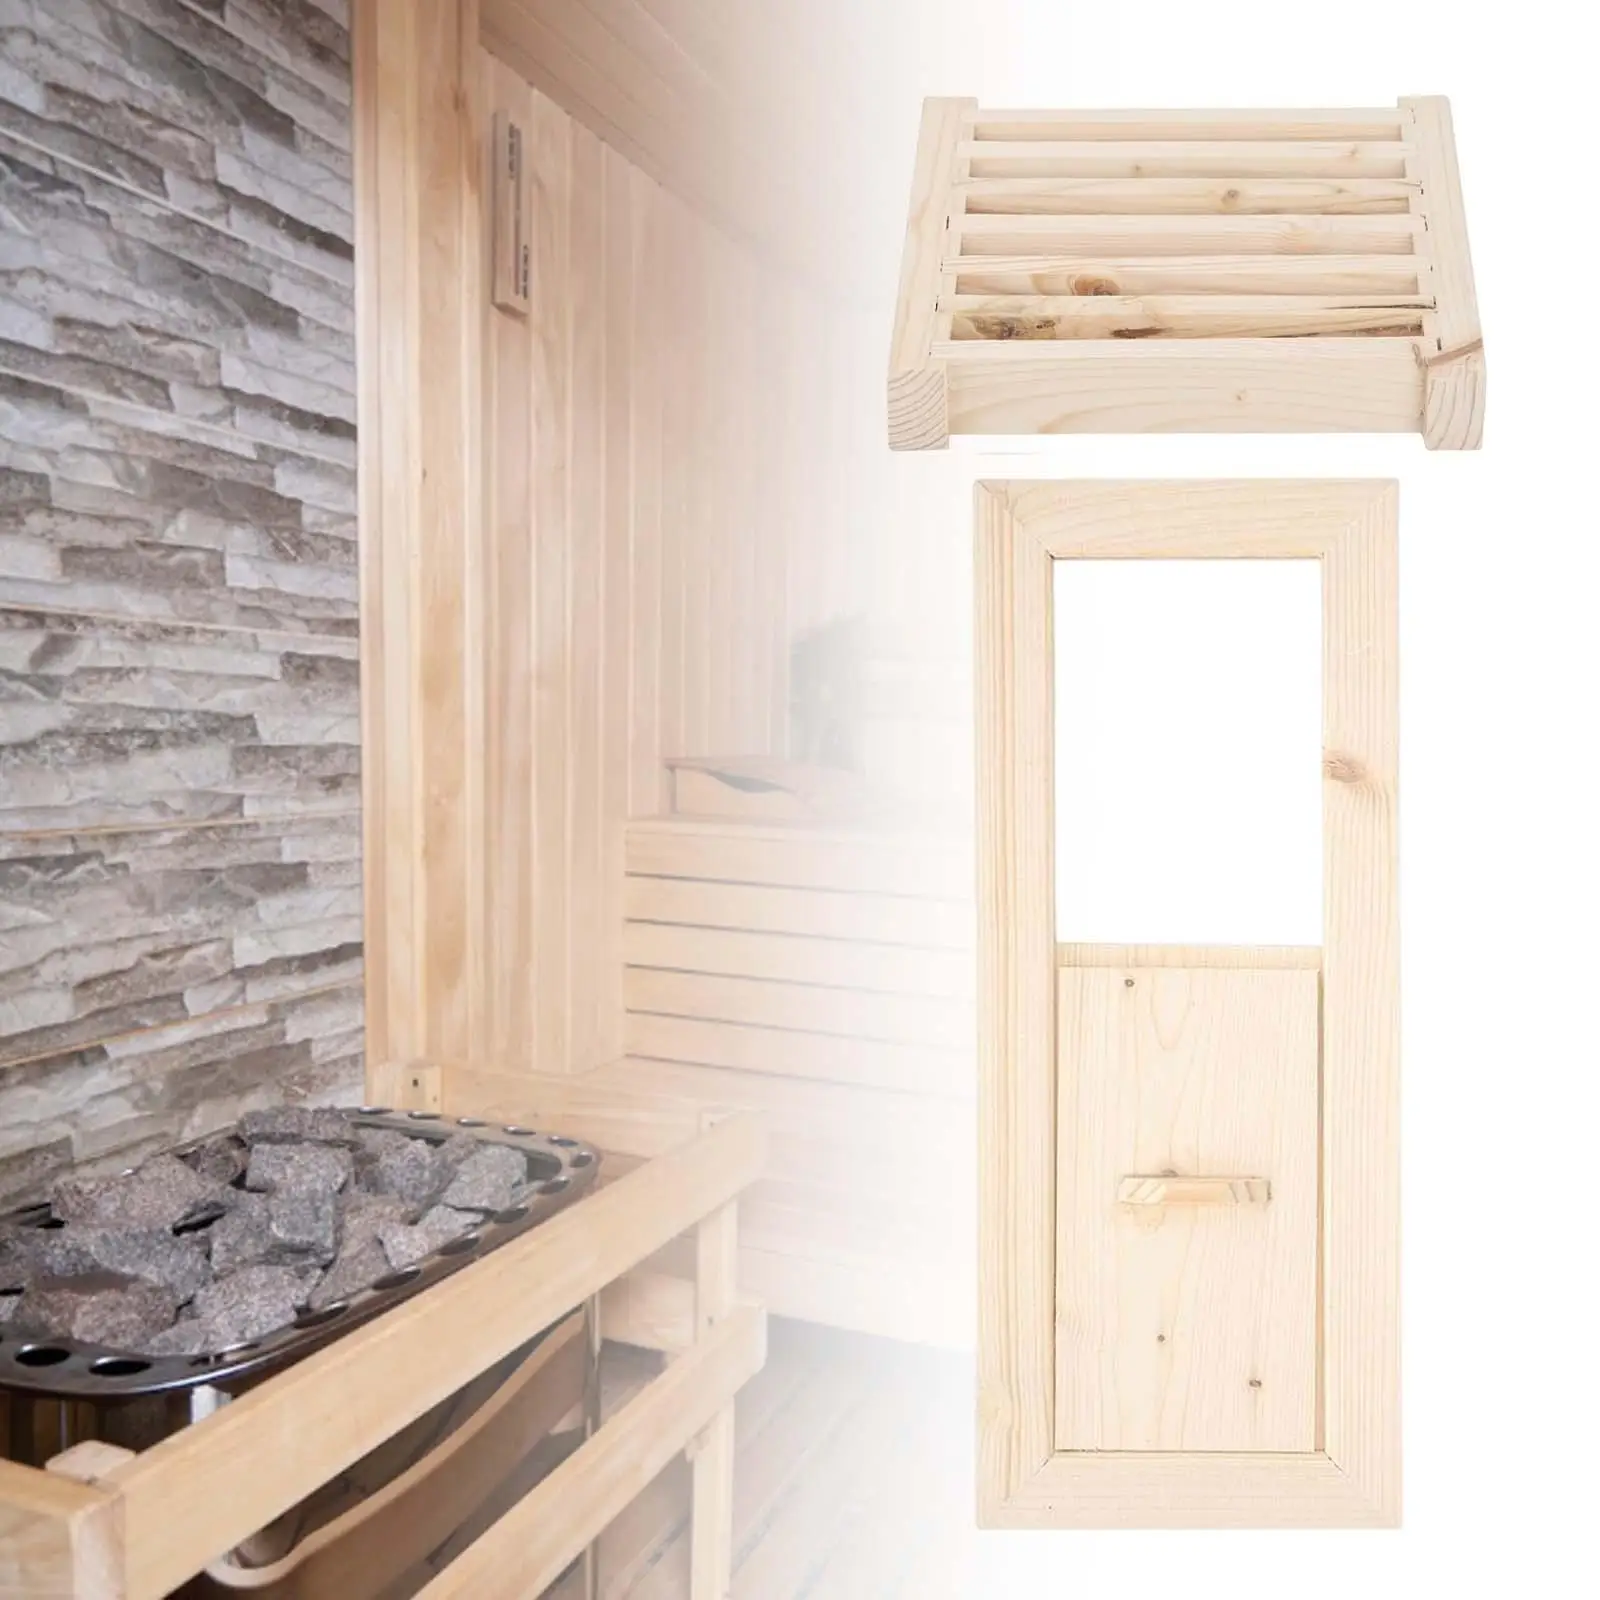 Sauna Shutter Window Grille Ventilation panel wooden Louvers Window for Sauna Room Accessories